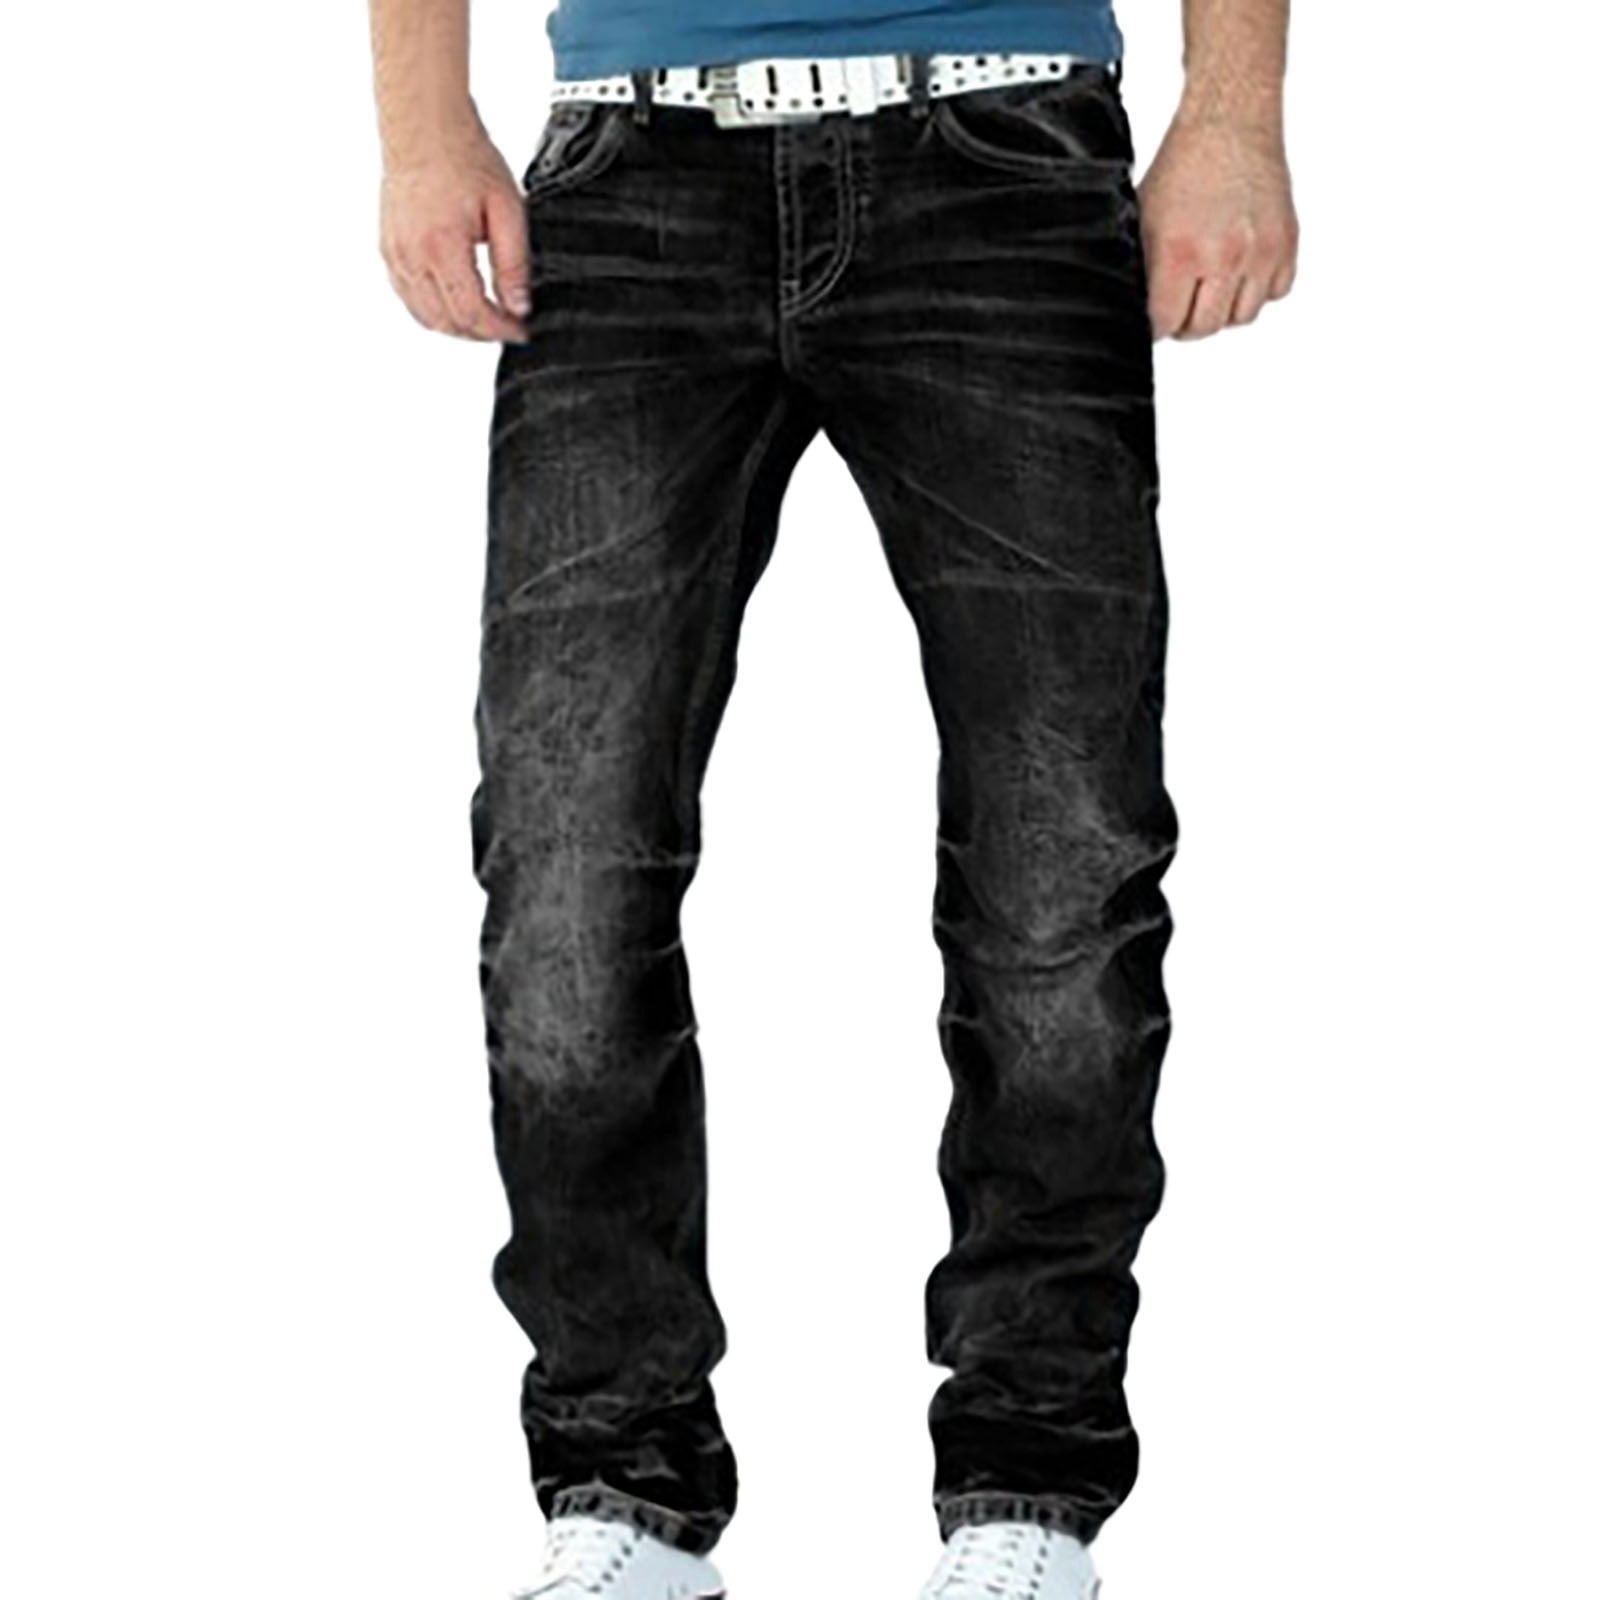 adviicd Slim Fit Jeans for Men Men's Slim Fit Skinny Stretch Comfy ...